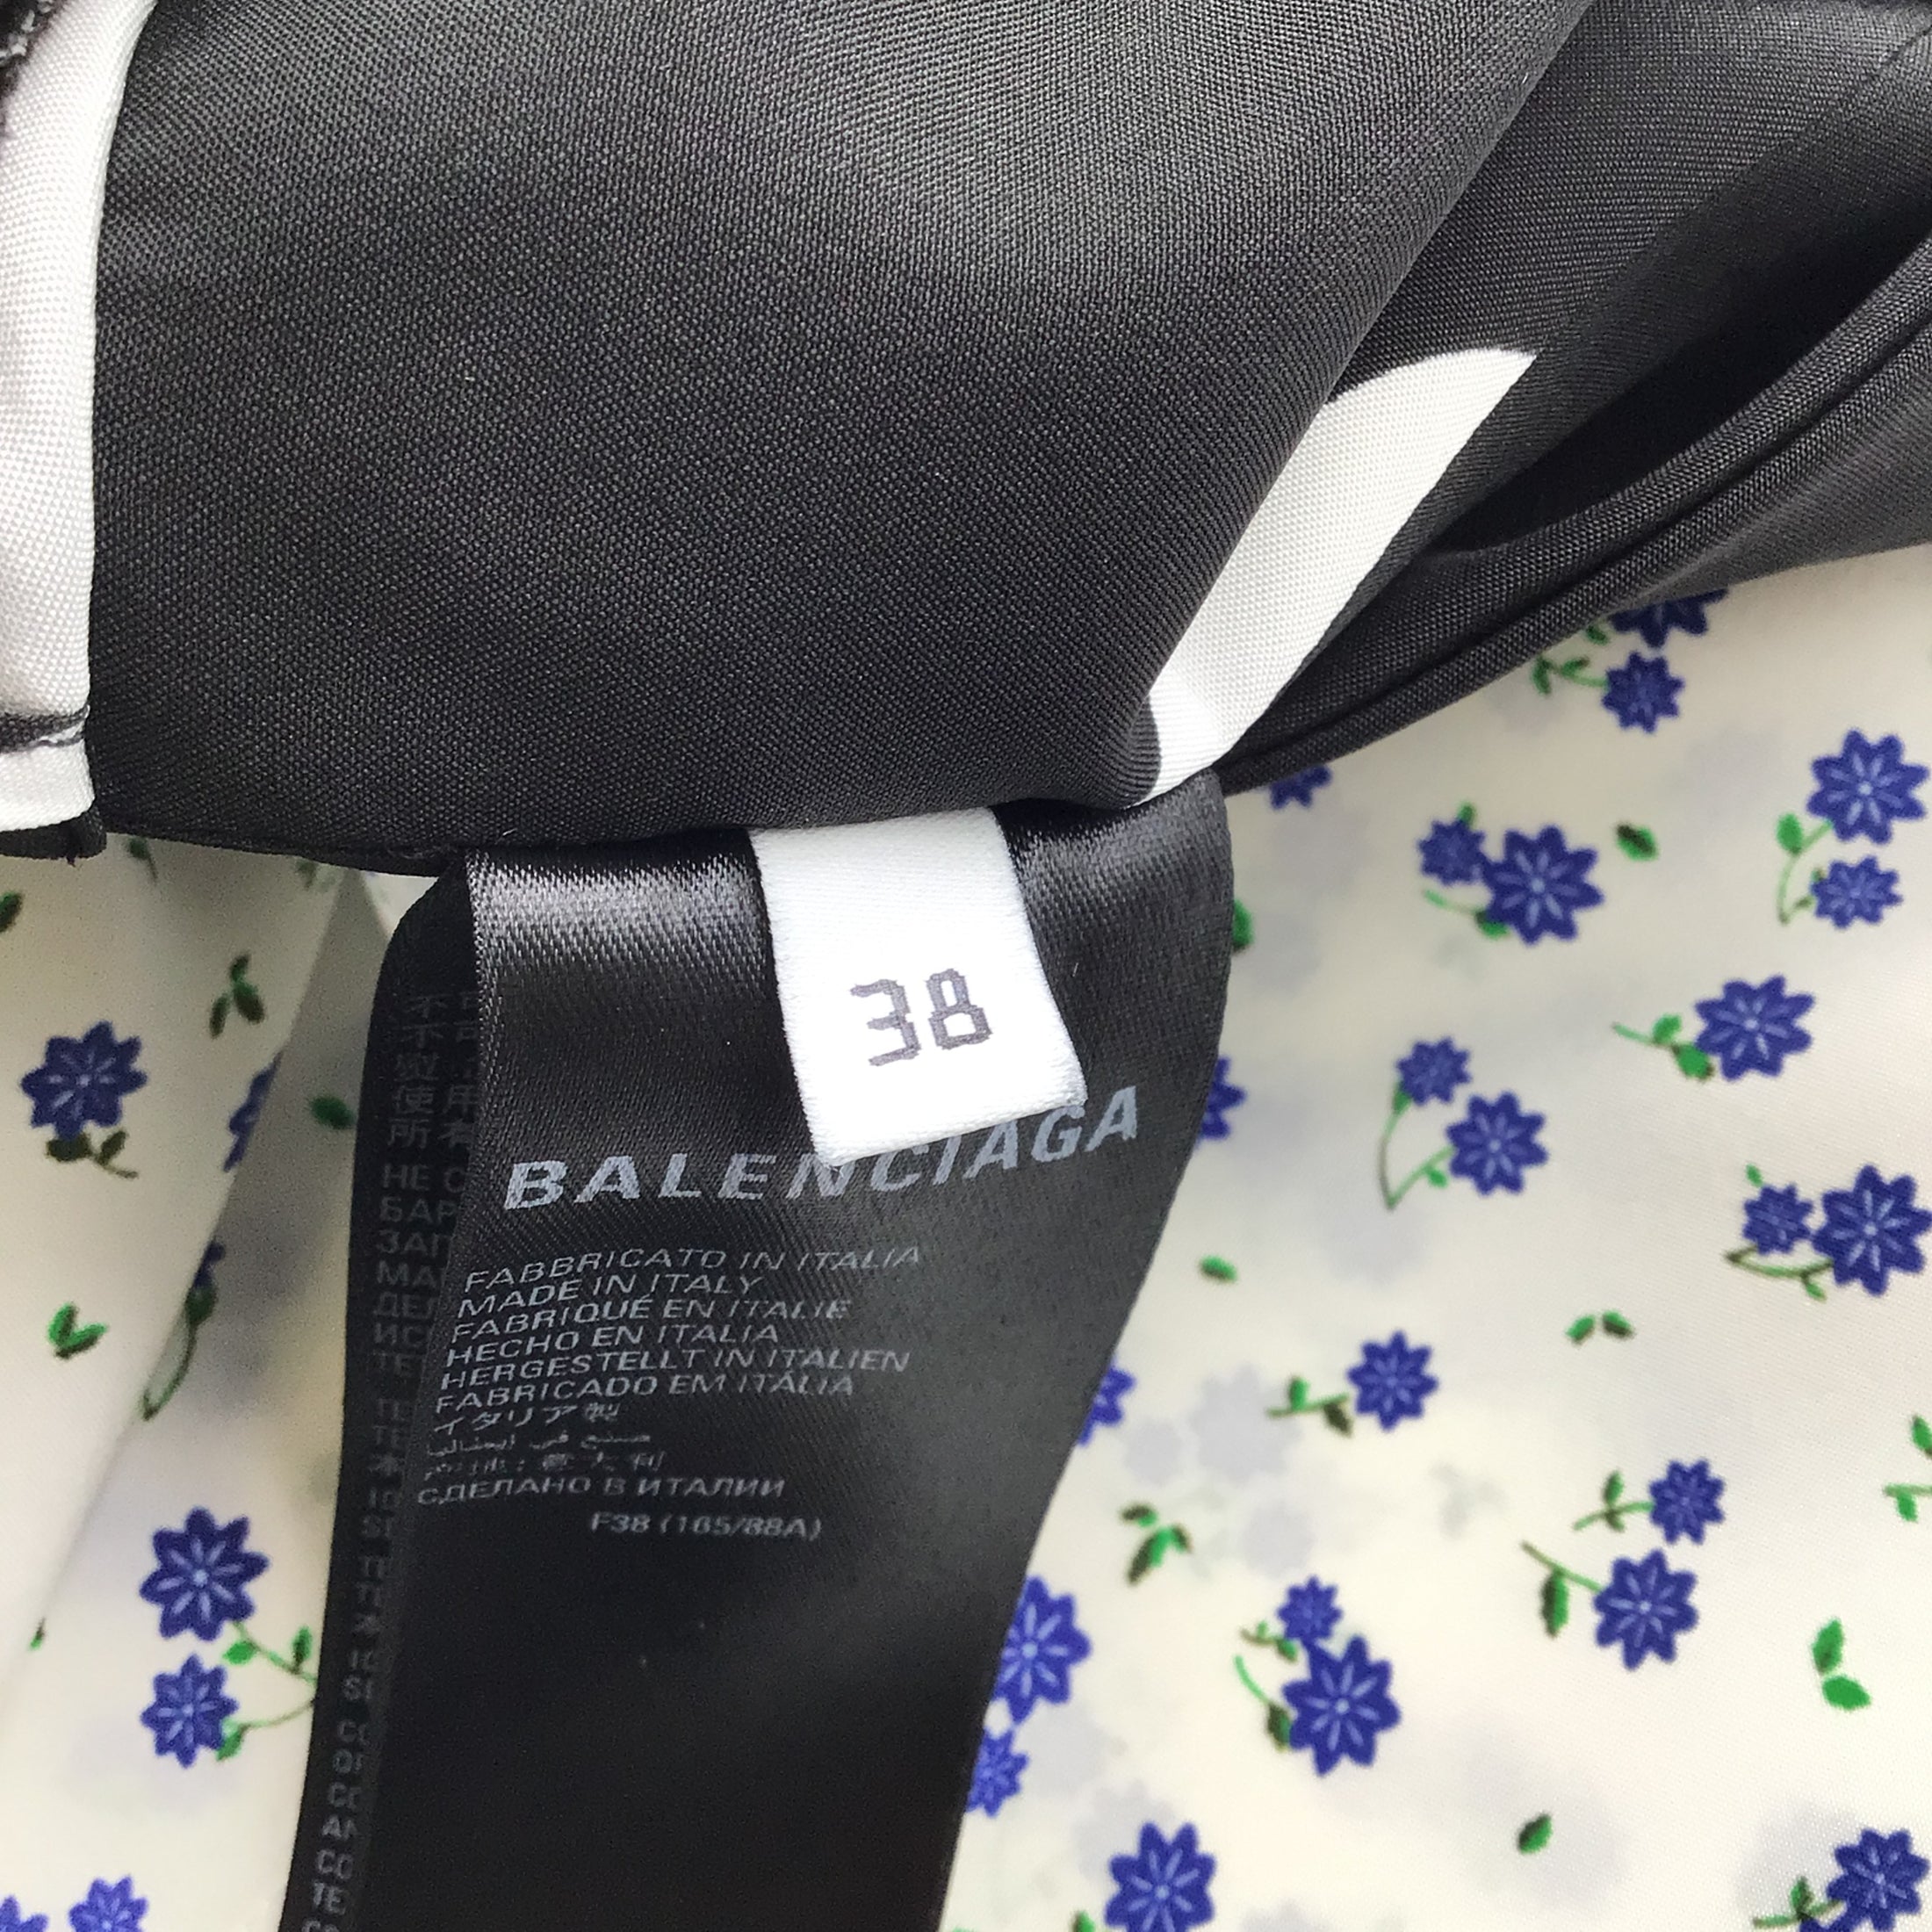 Balenciaga Black / White Multi Floral Polka Dot Printed Silk Blouse